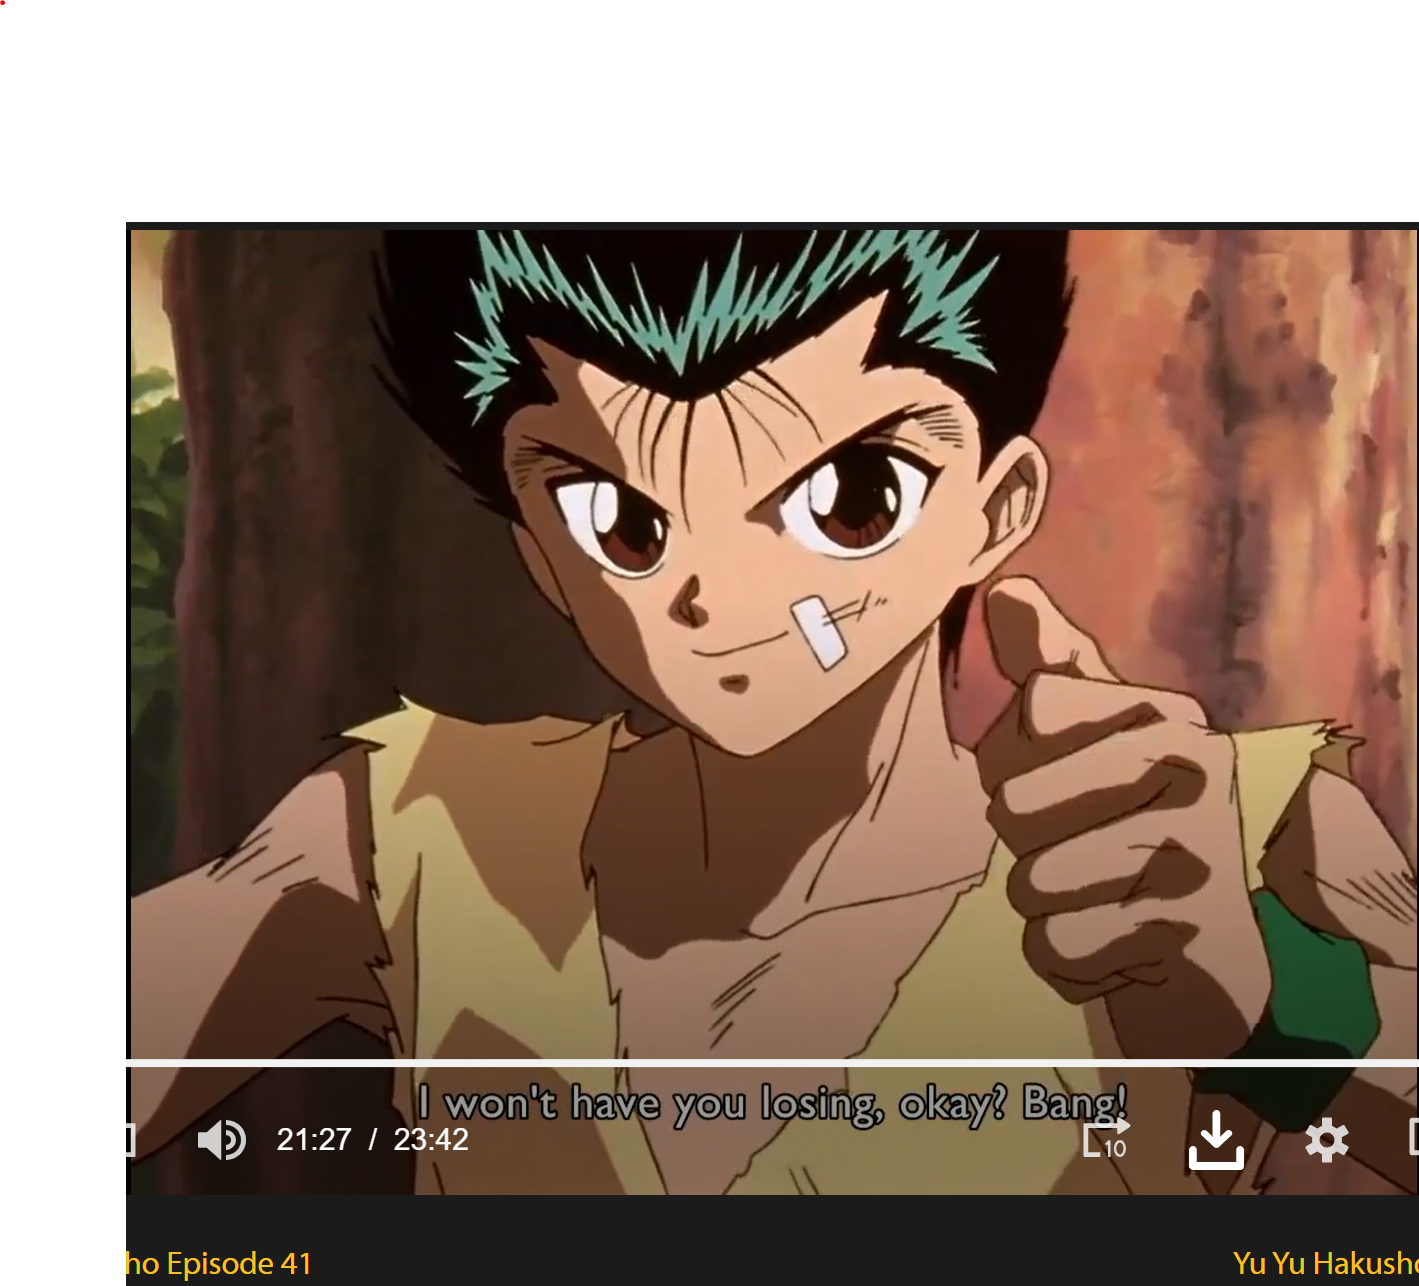 New 'Yu Yu Hakusho' Anime Screenshots Give First Look at Yusuke